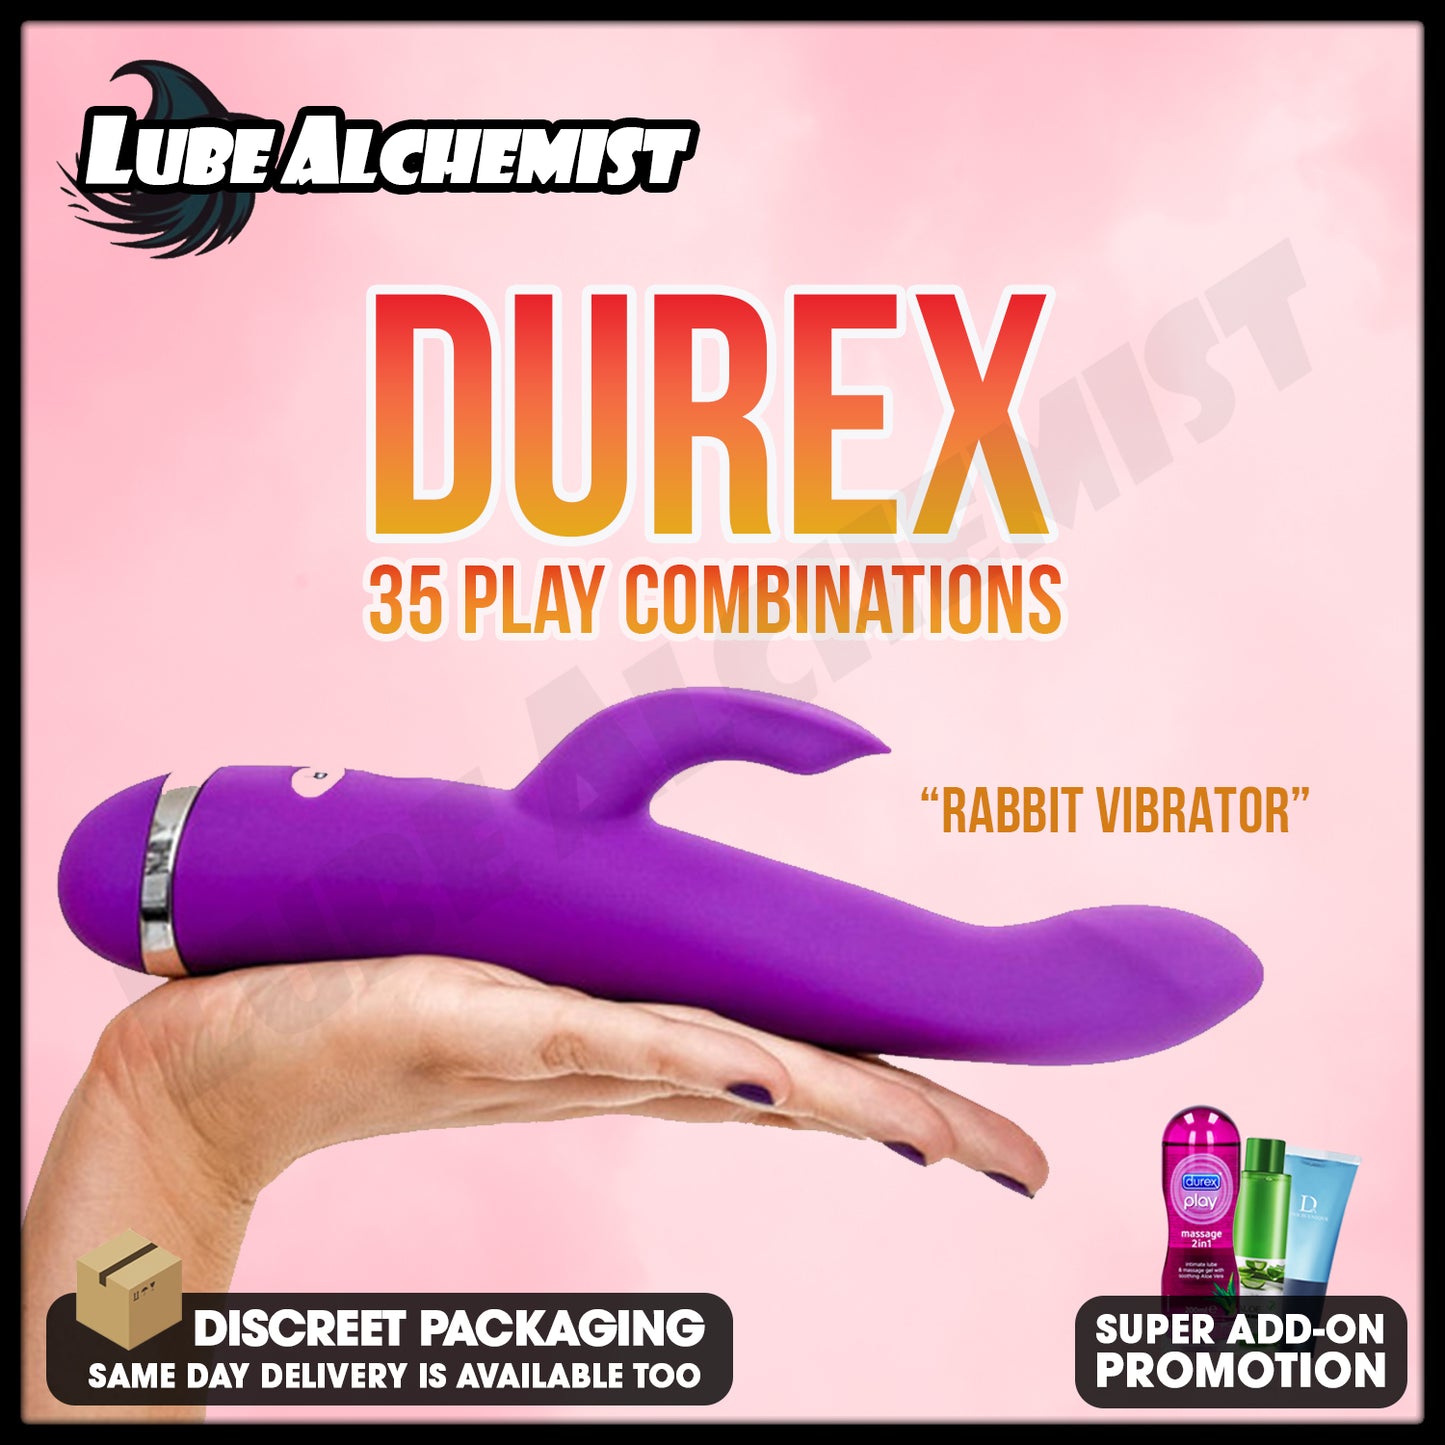 LubeAlchemist™ Durex New Rabbit Vibrator